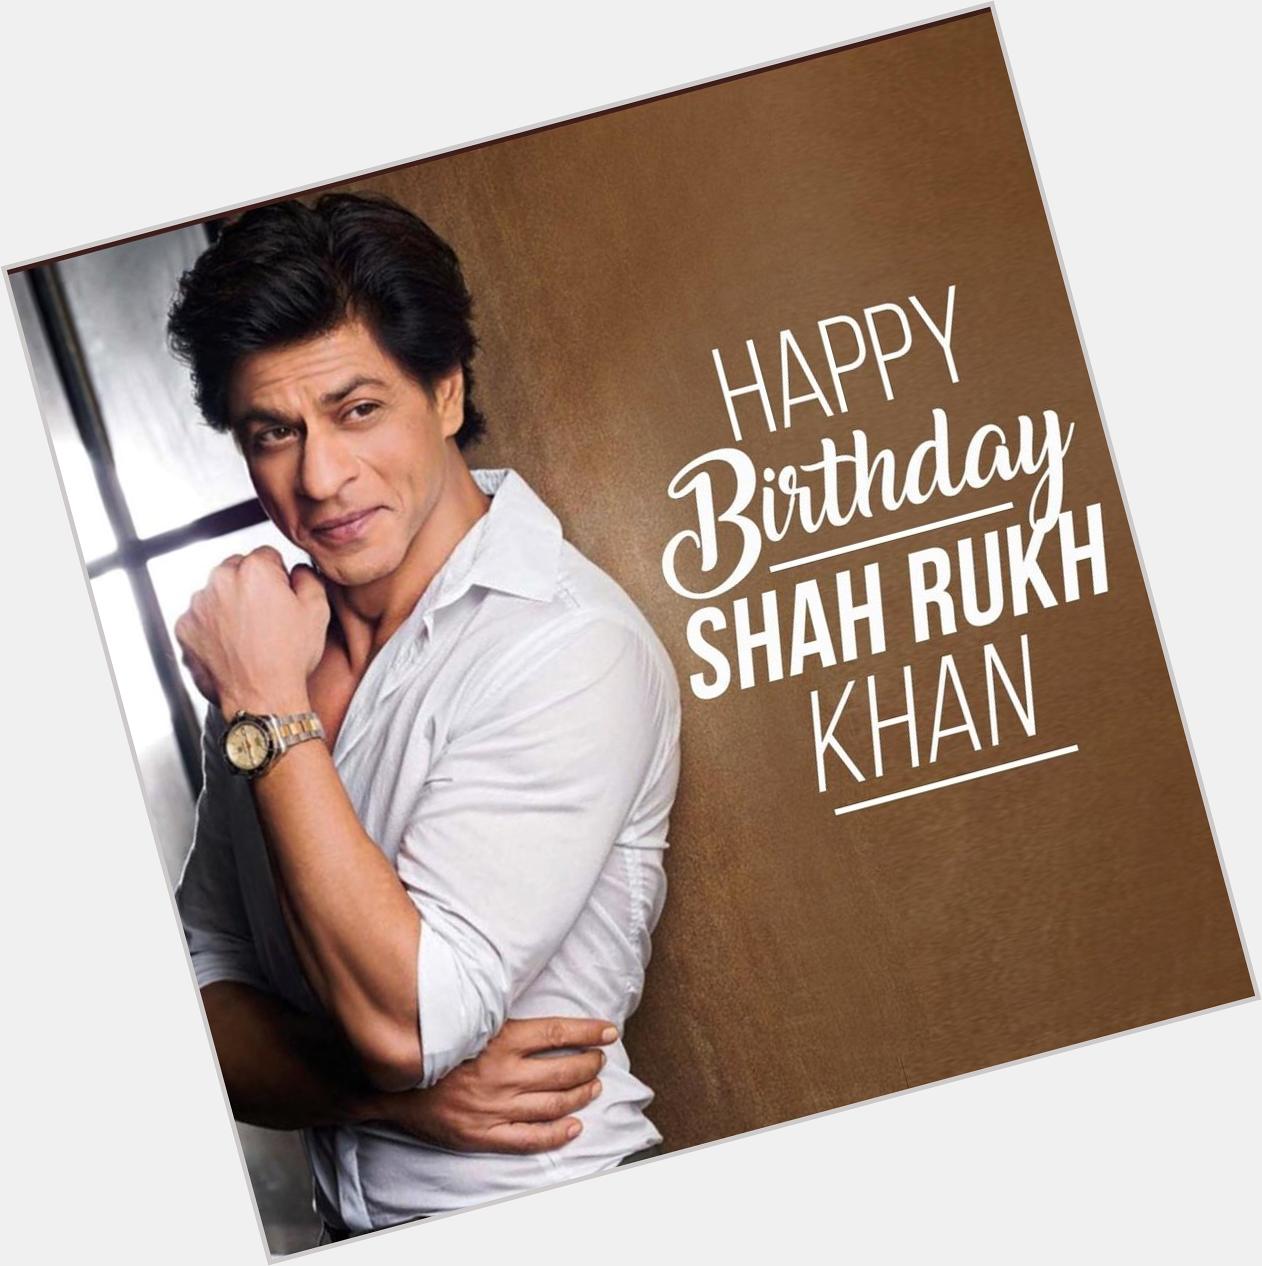 Happy birthday to shah rukh khan aka king khan love u sir 